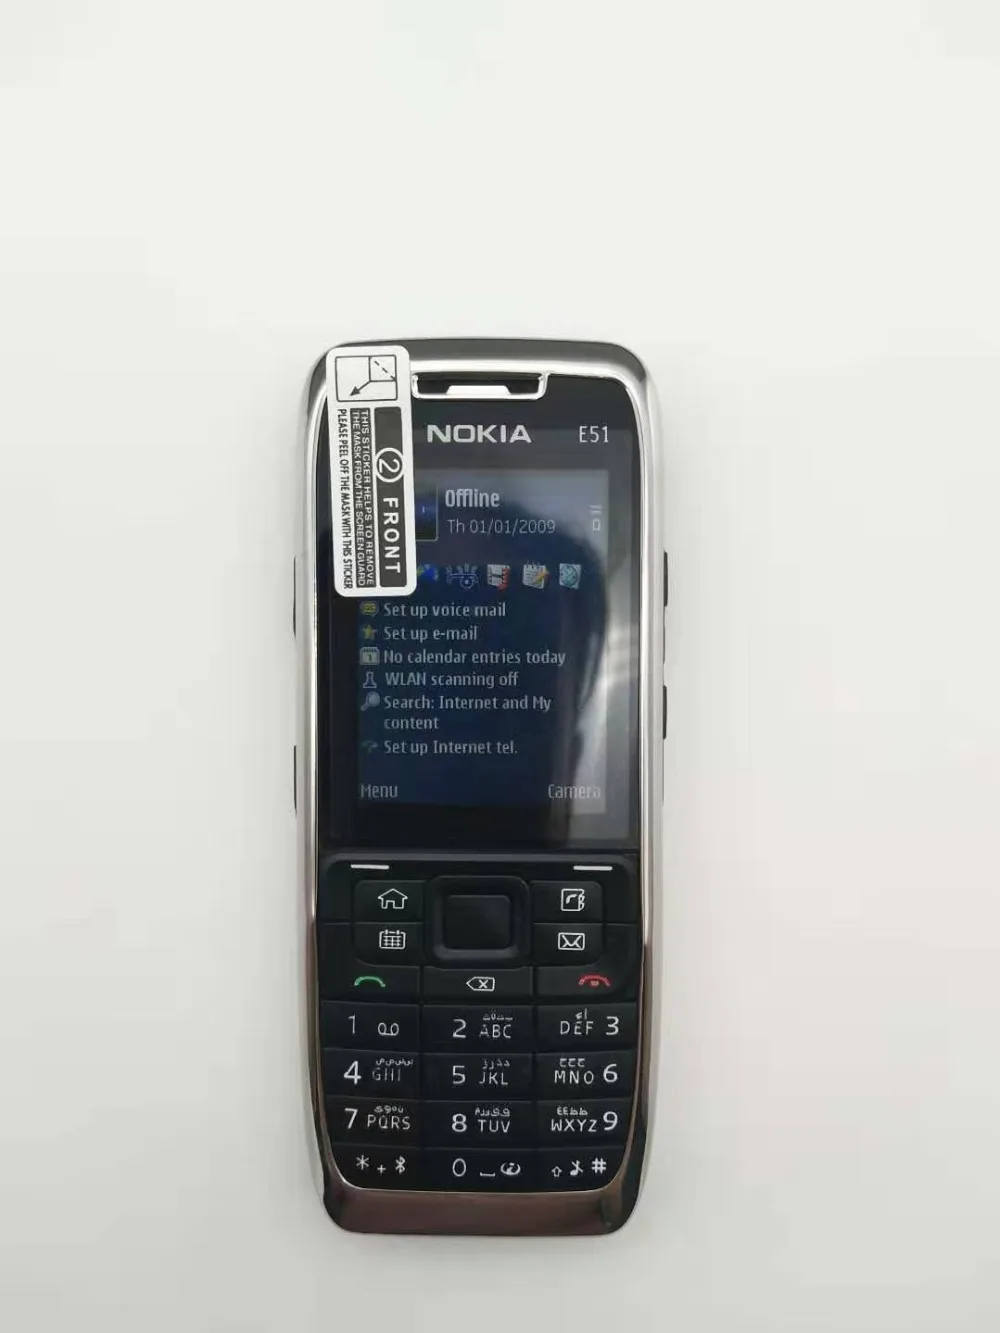 backmarket phones Nokia E51 with Camera Refurbished-Original  Mobile Phones JAVA WIFI Unlock Cell Phone Refurbished In Stock refurbished iphone